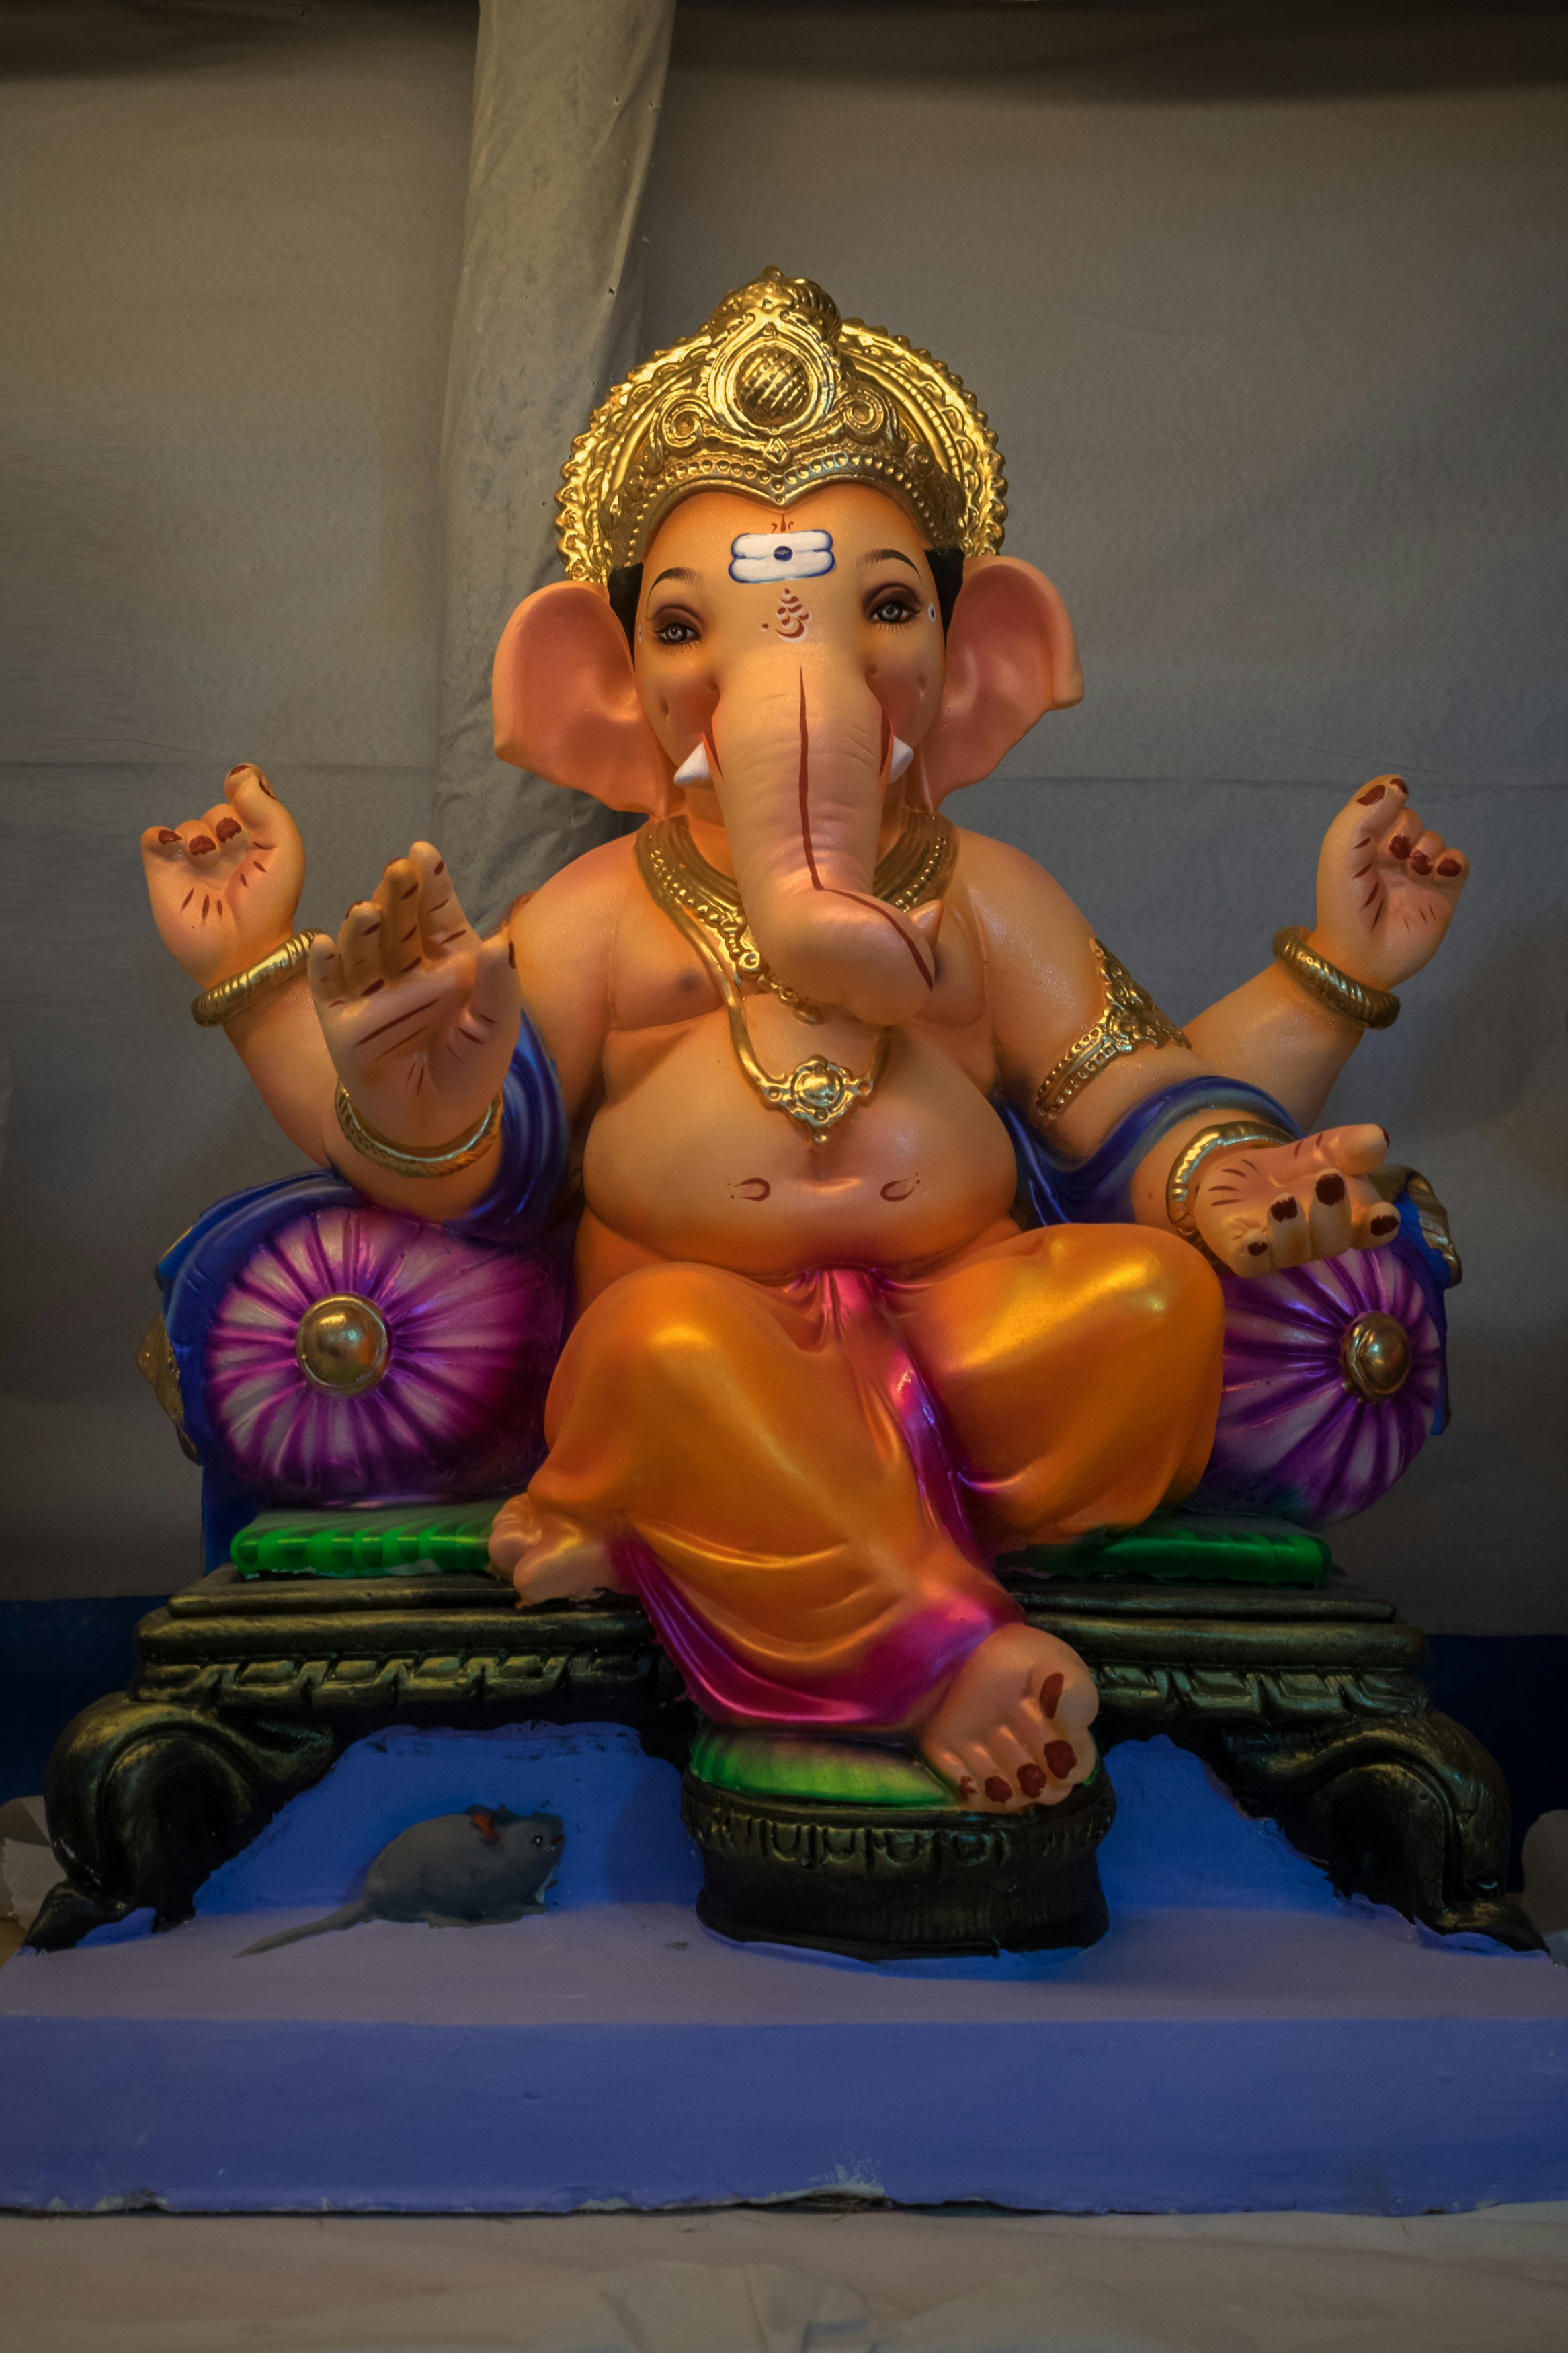 gold hindu deity figurine on blue textile